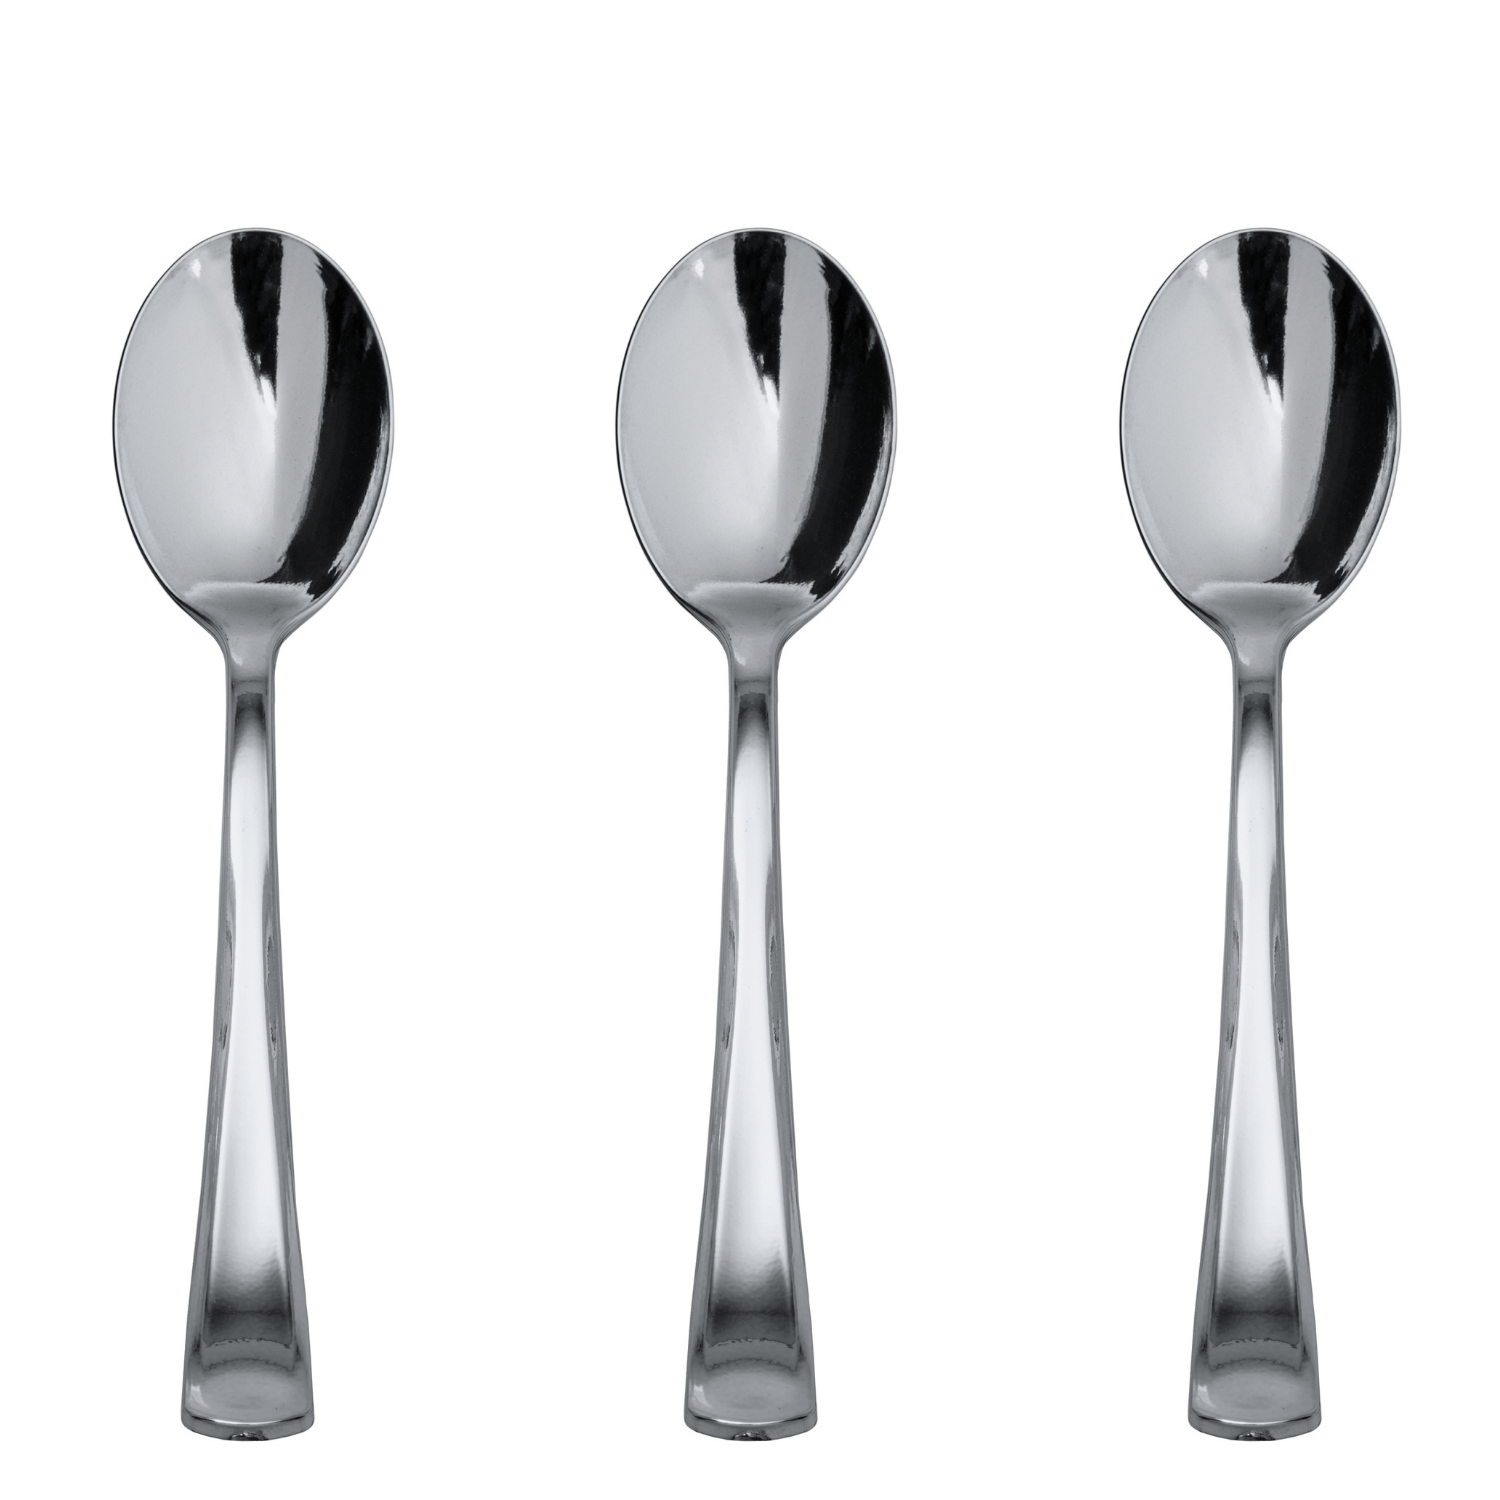 Exquisite Silver Plastic Spoons | 480 Count